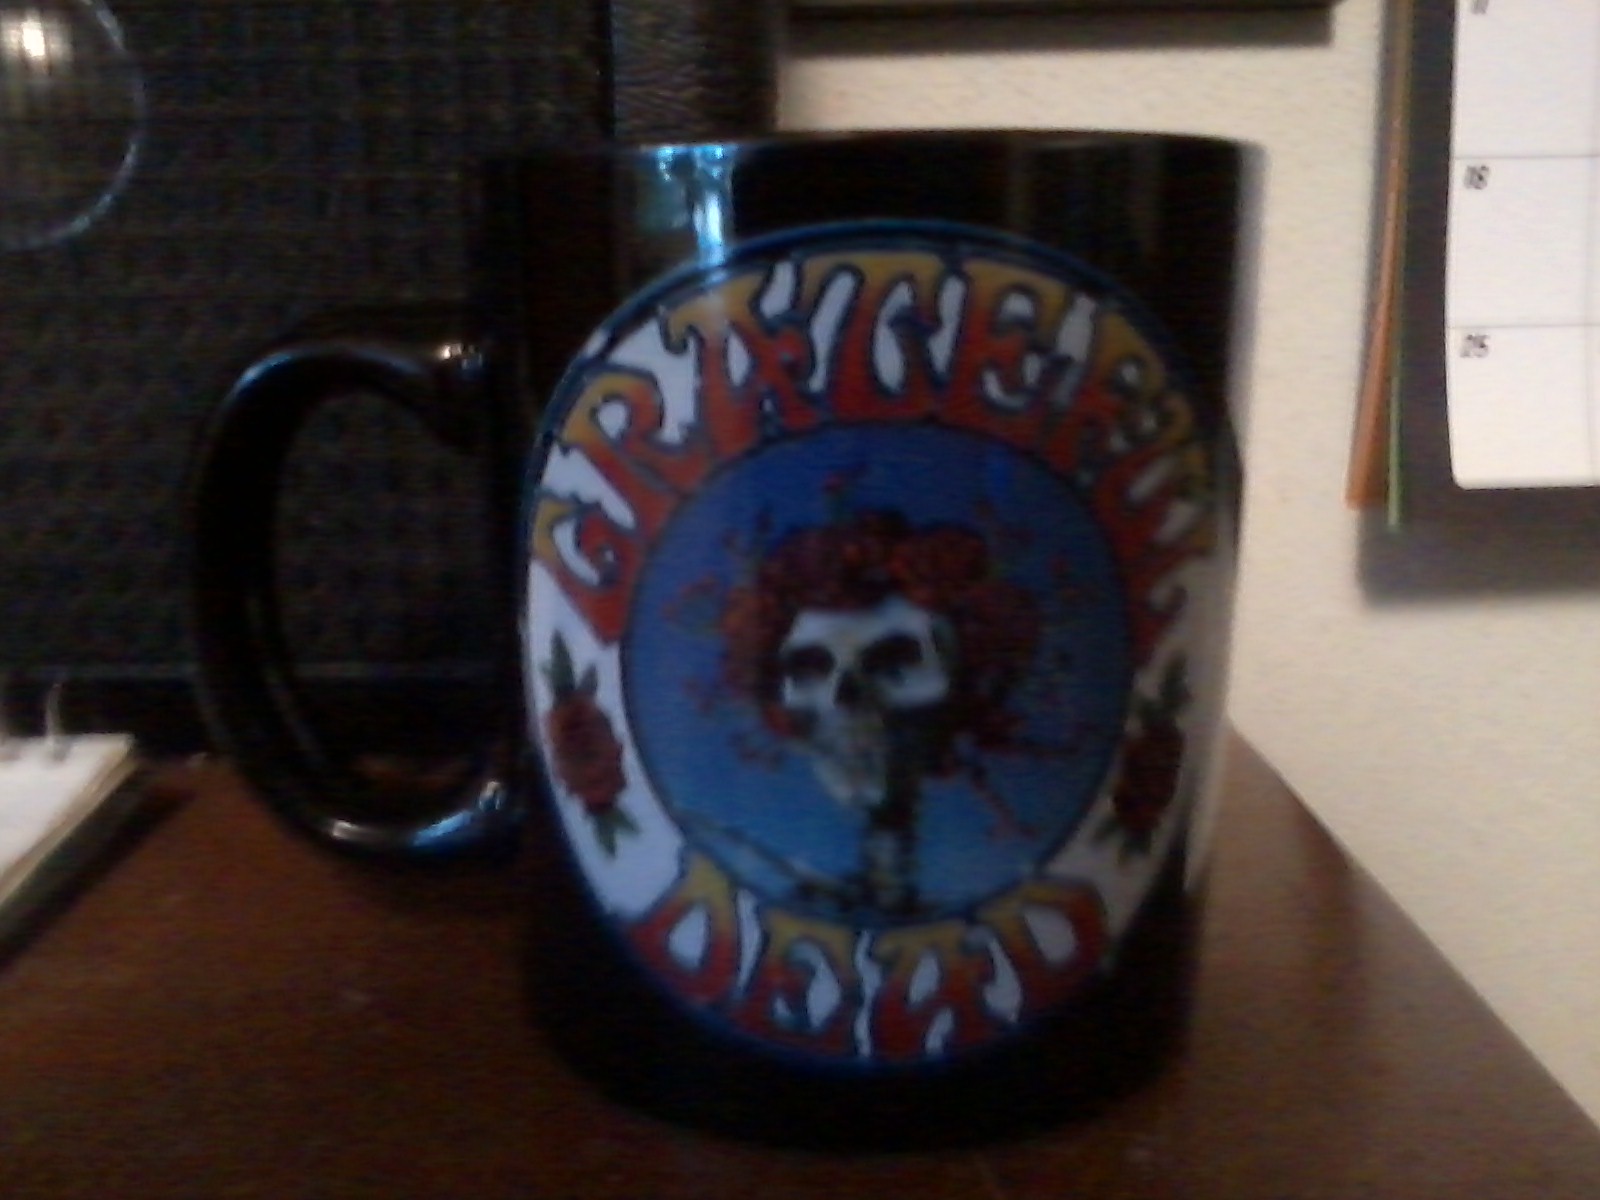 my dad gave me money to buy this coffee mug